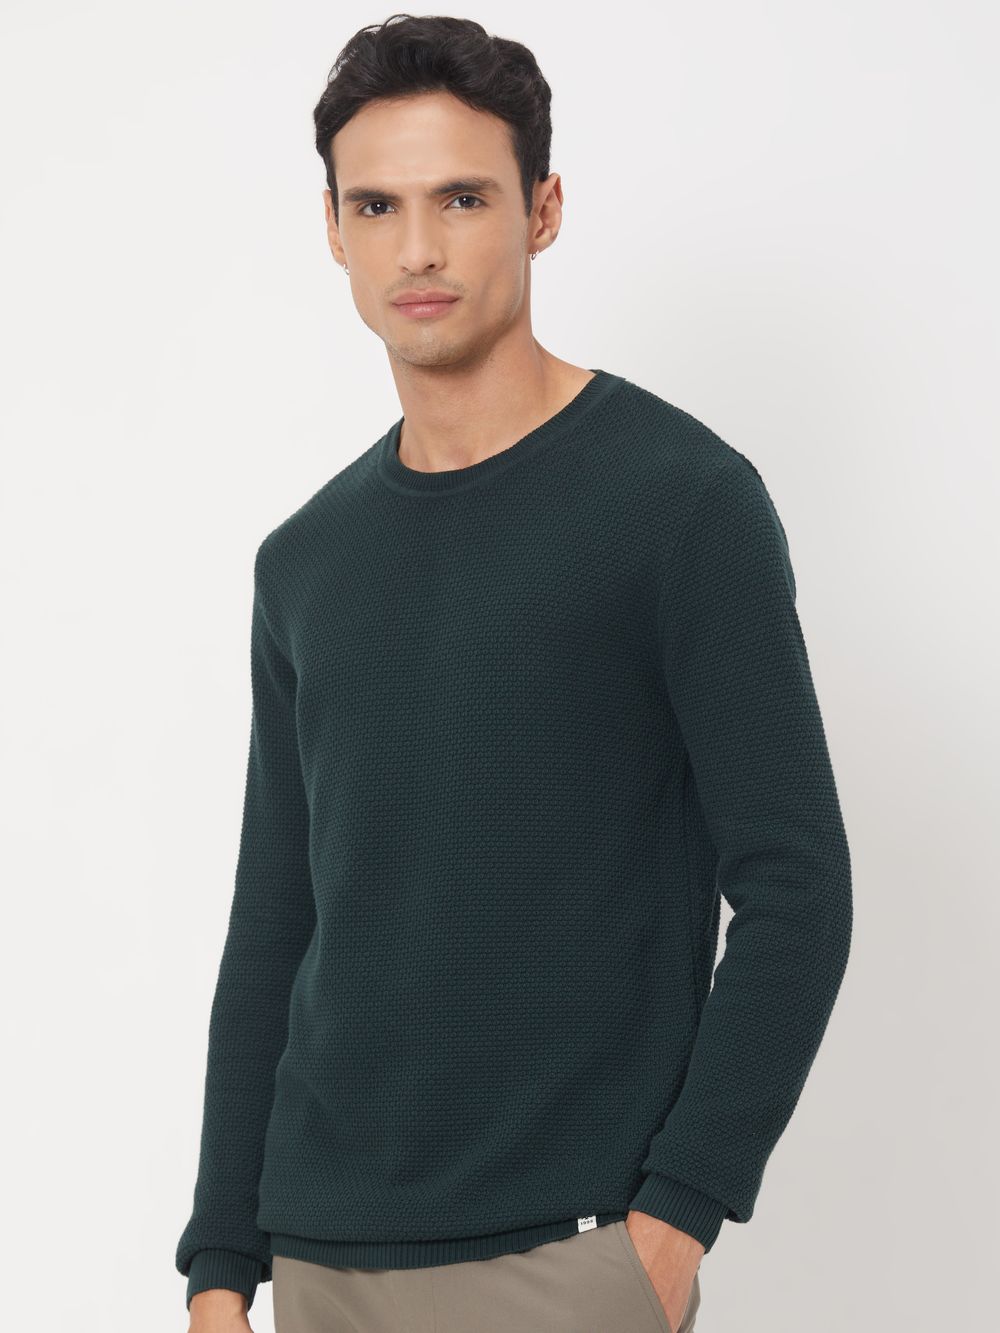 Green Textured Slim Fit Sweater